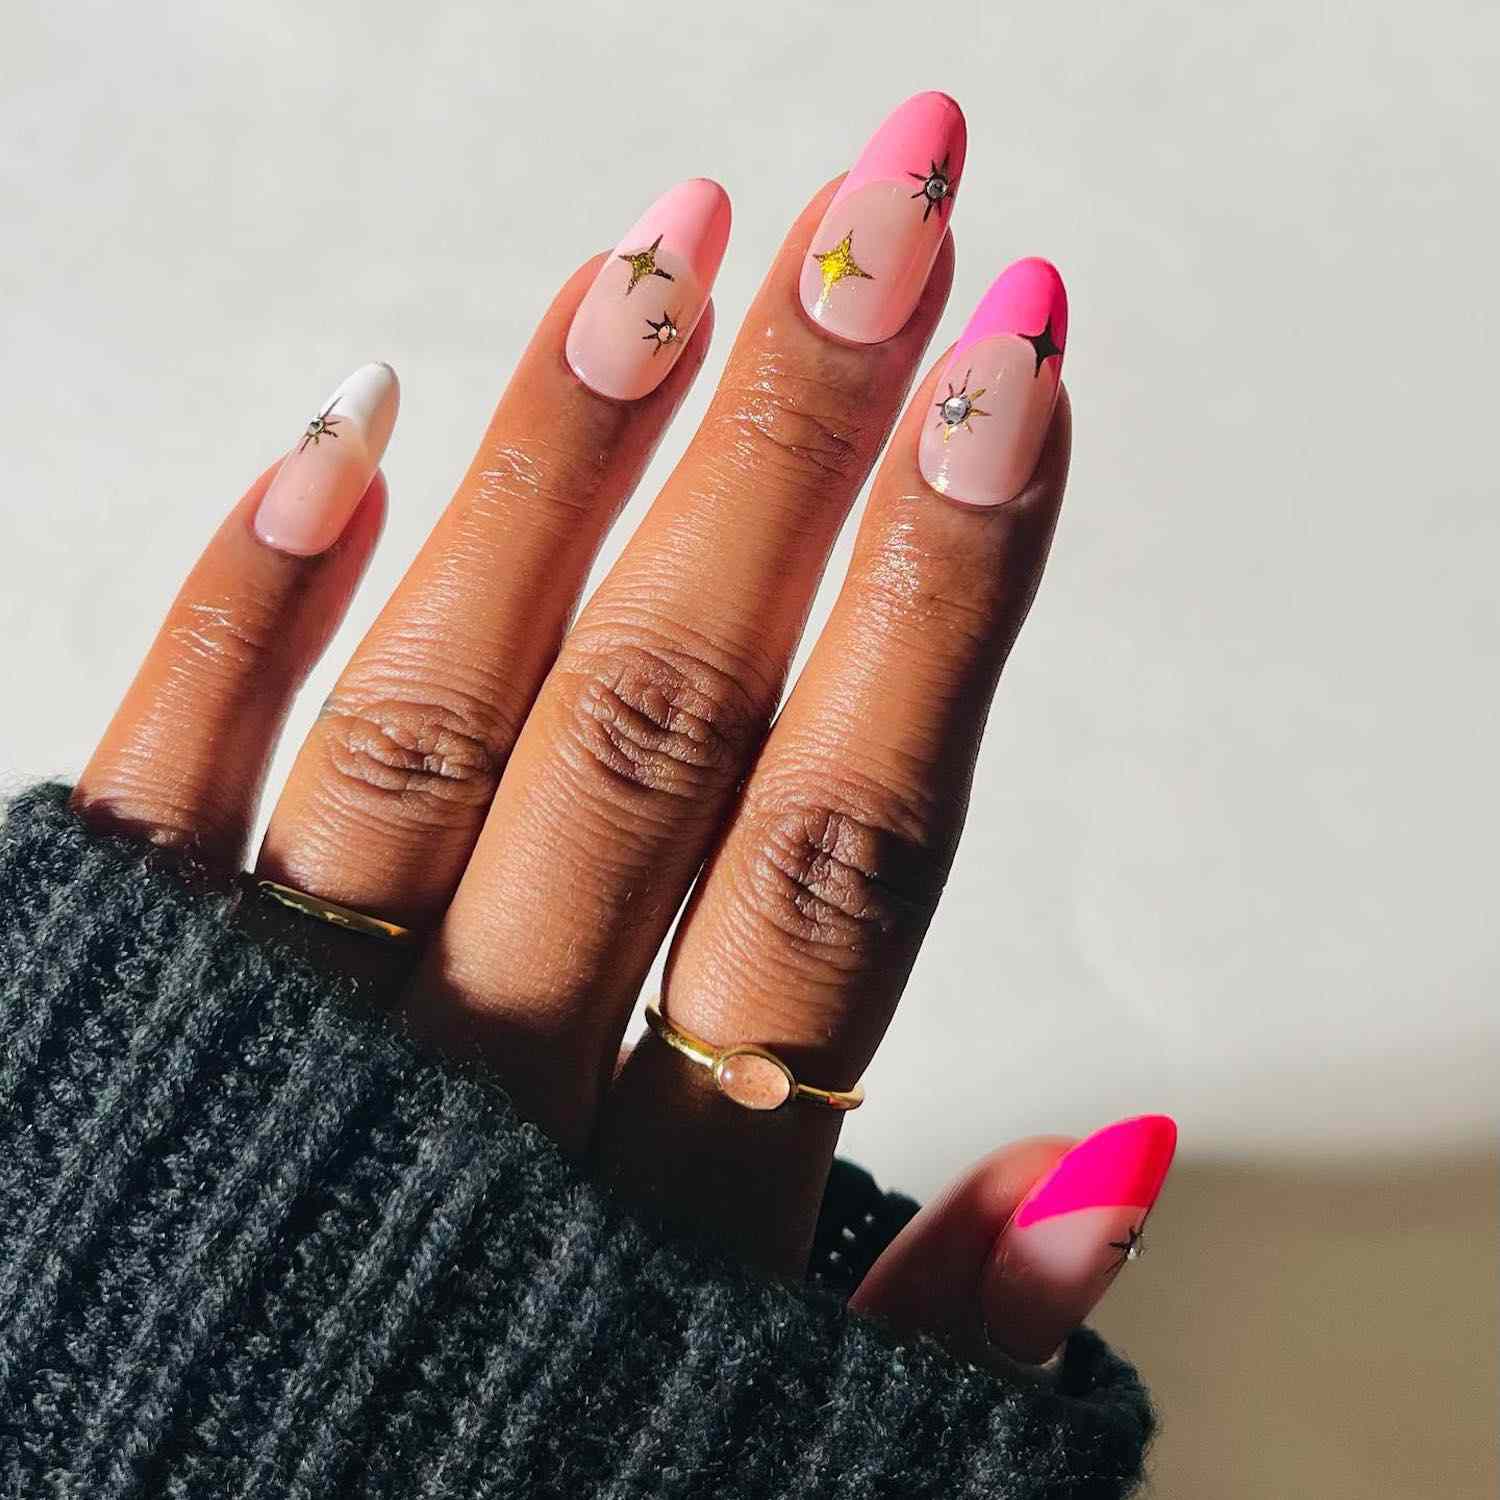 Manicure francesa gradiente rosa com estrelas cromadas texturizadas